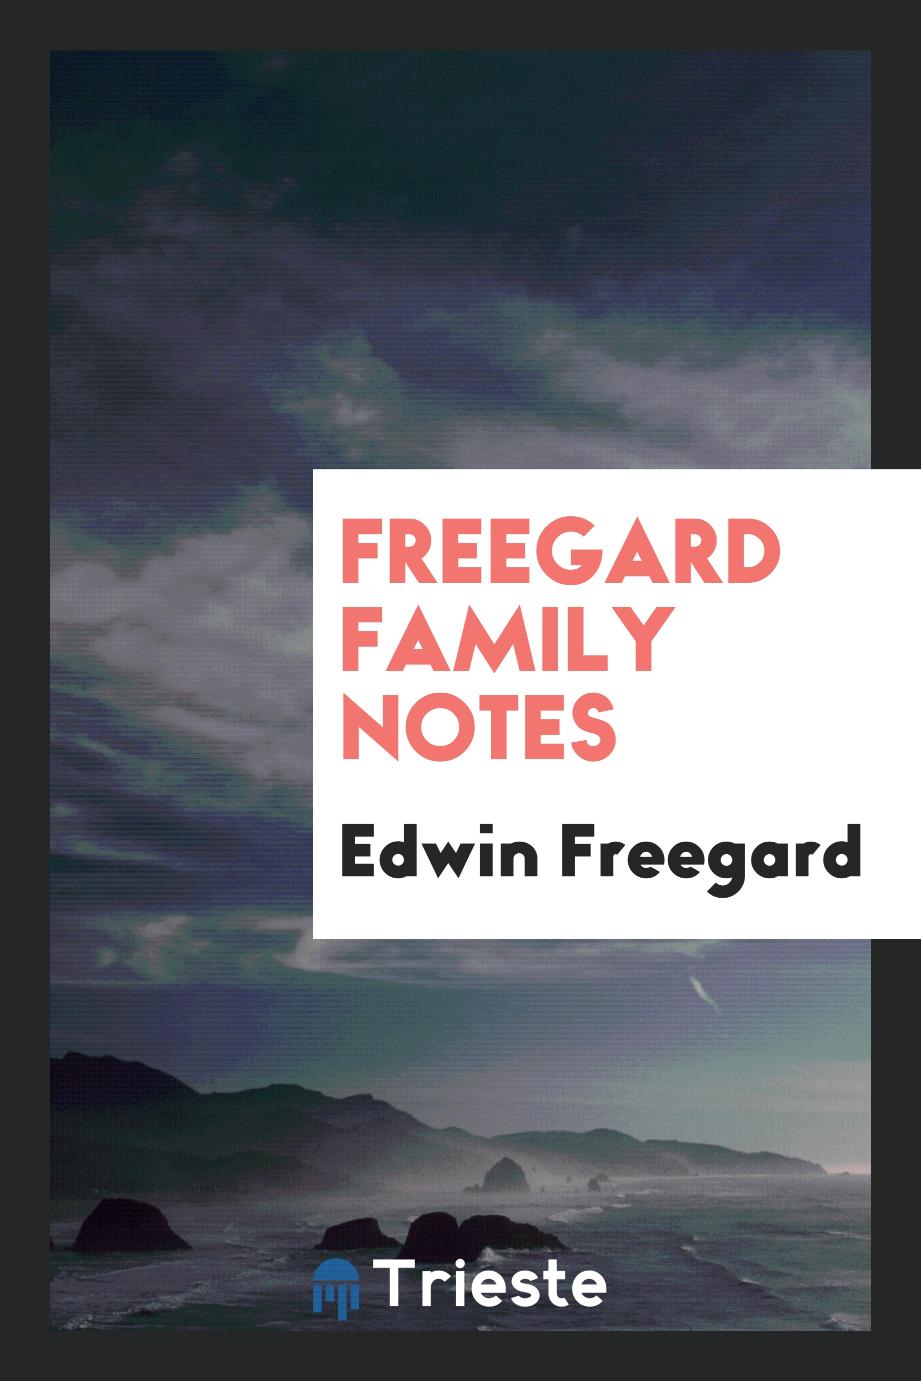 Freegard family notes